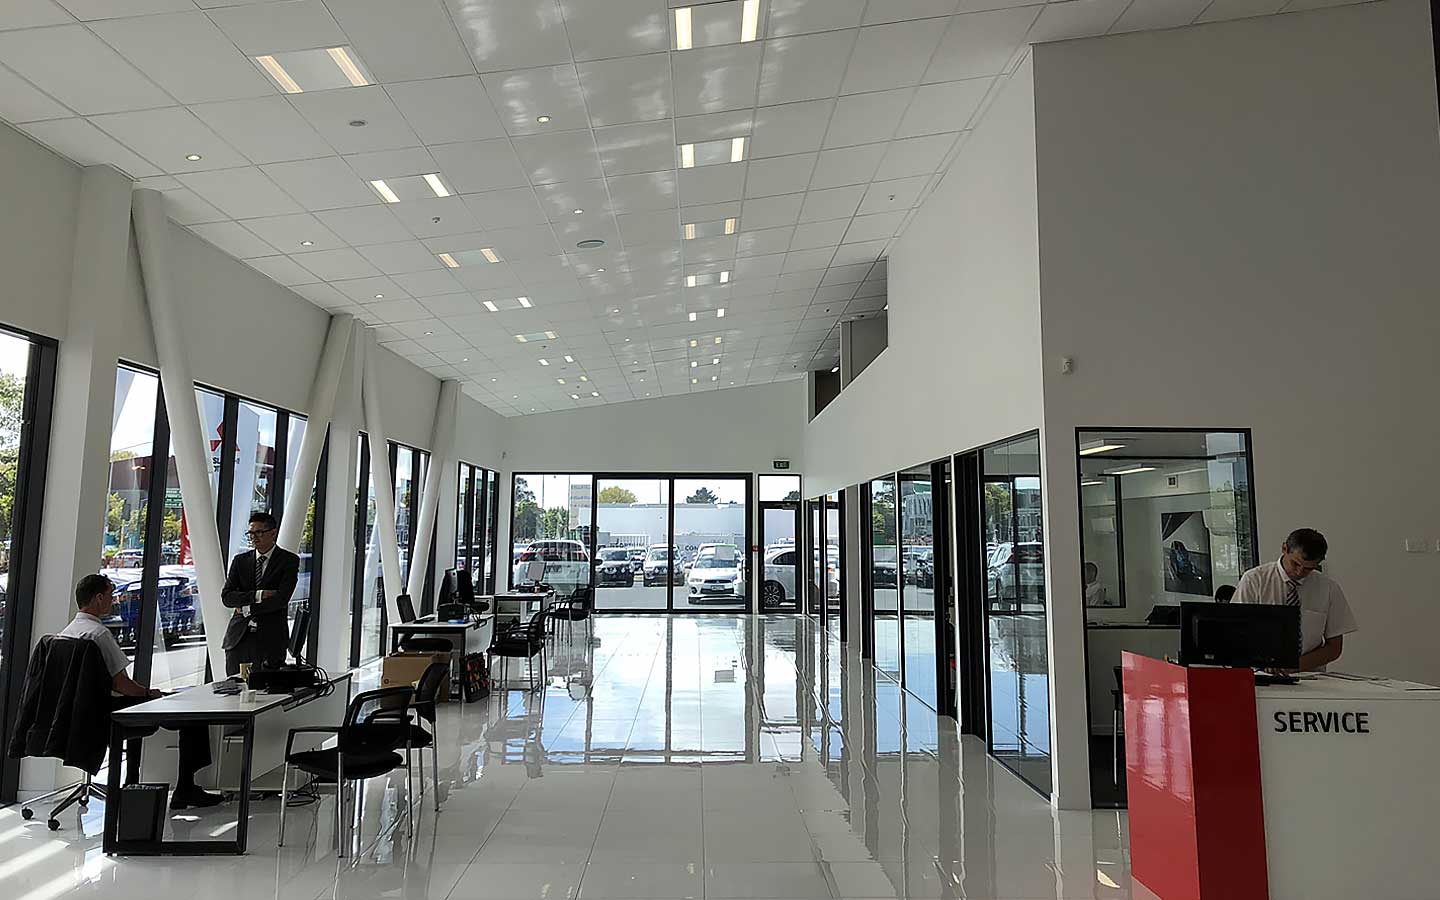 Car dealership interior.